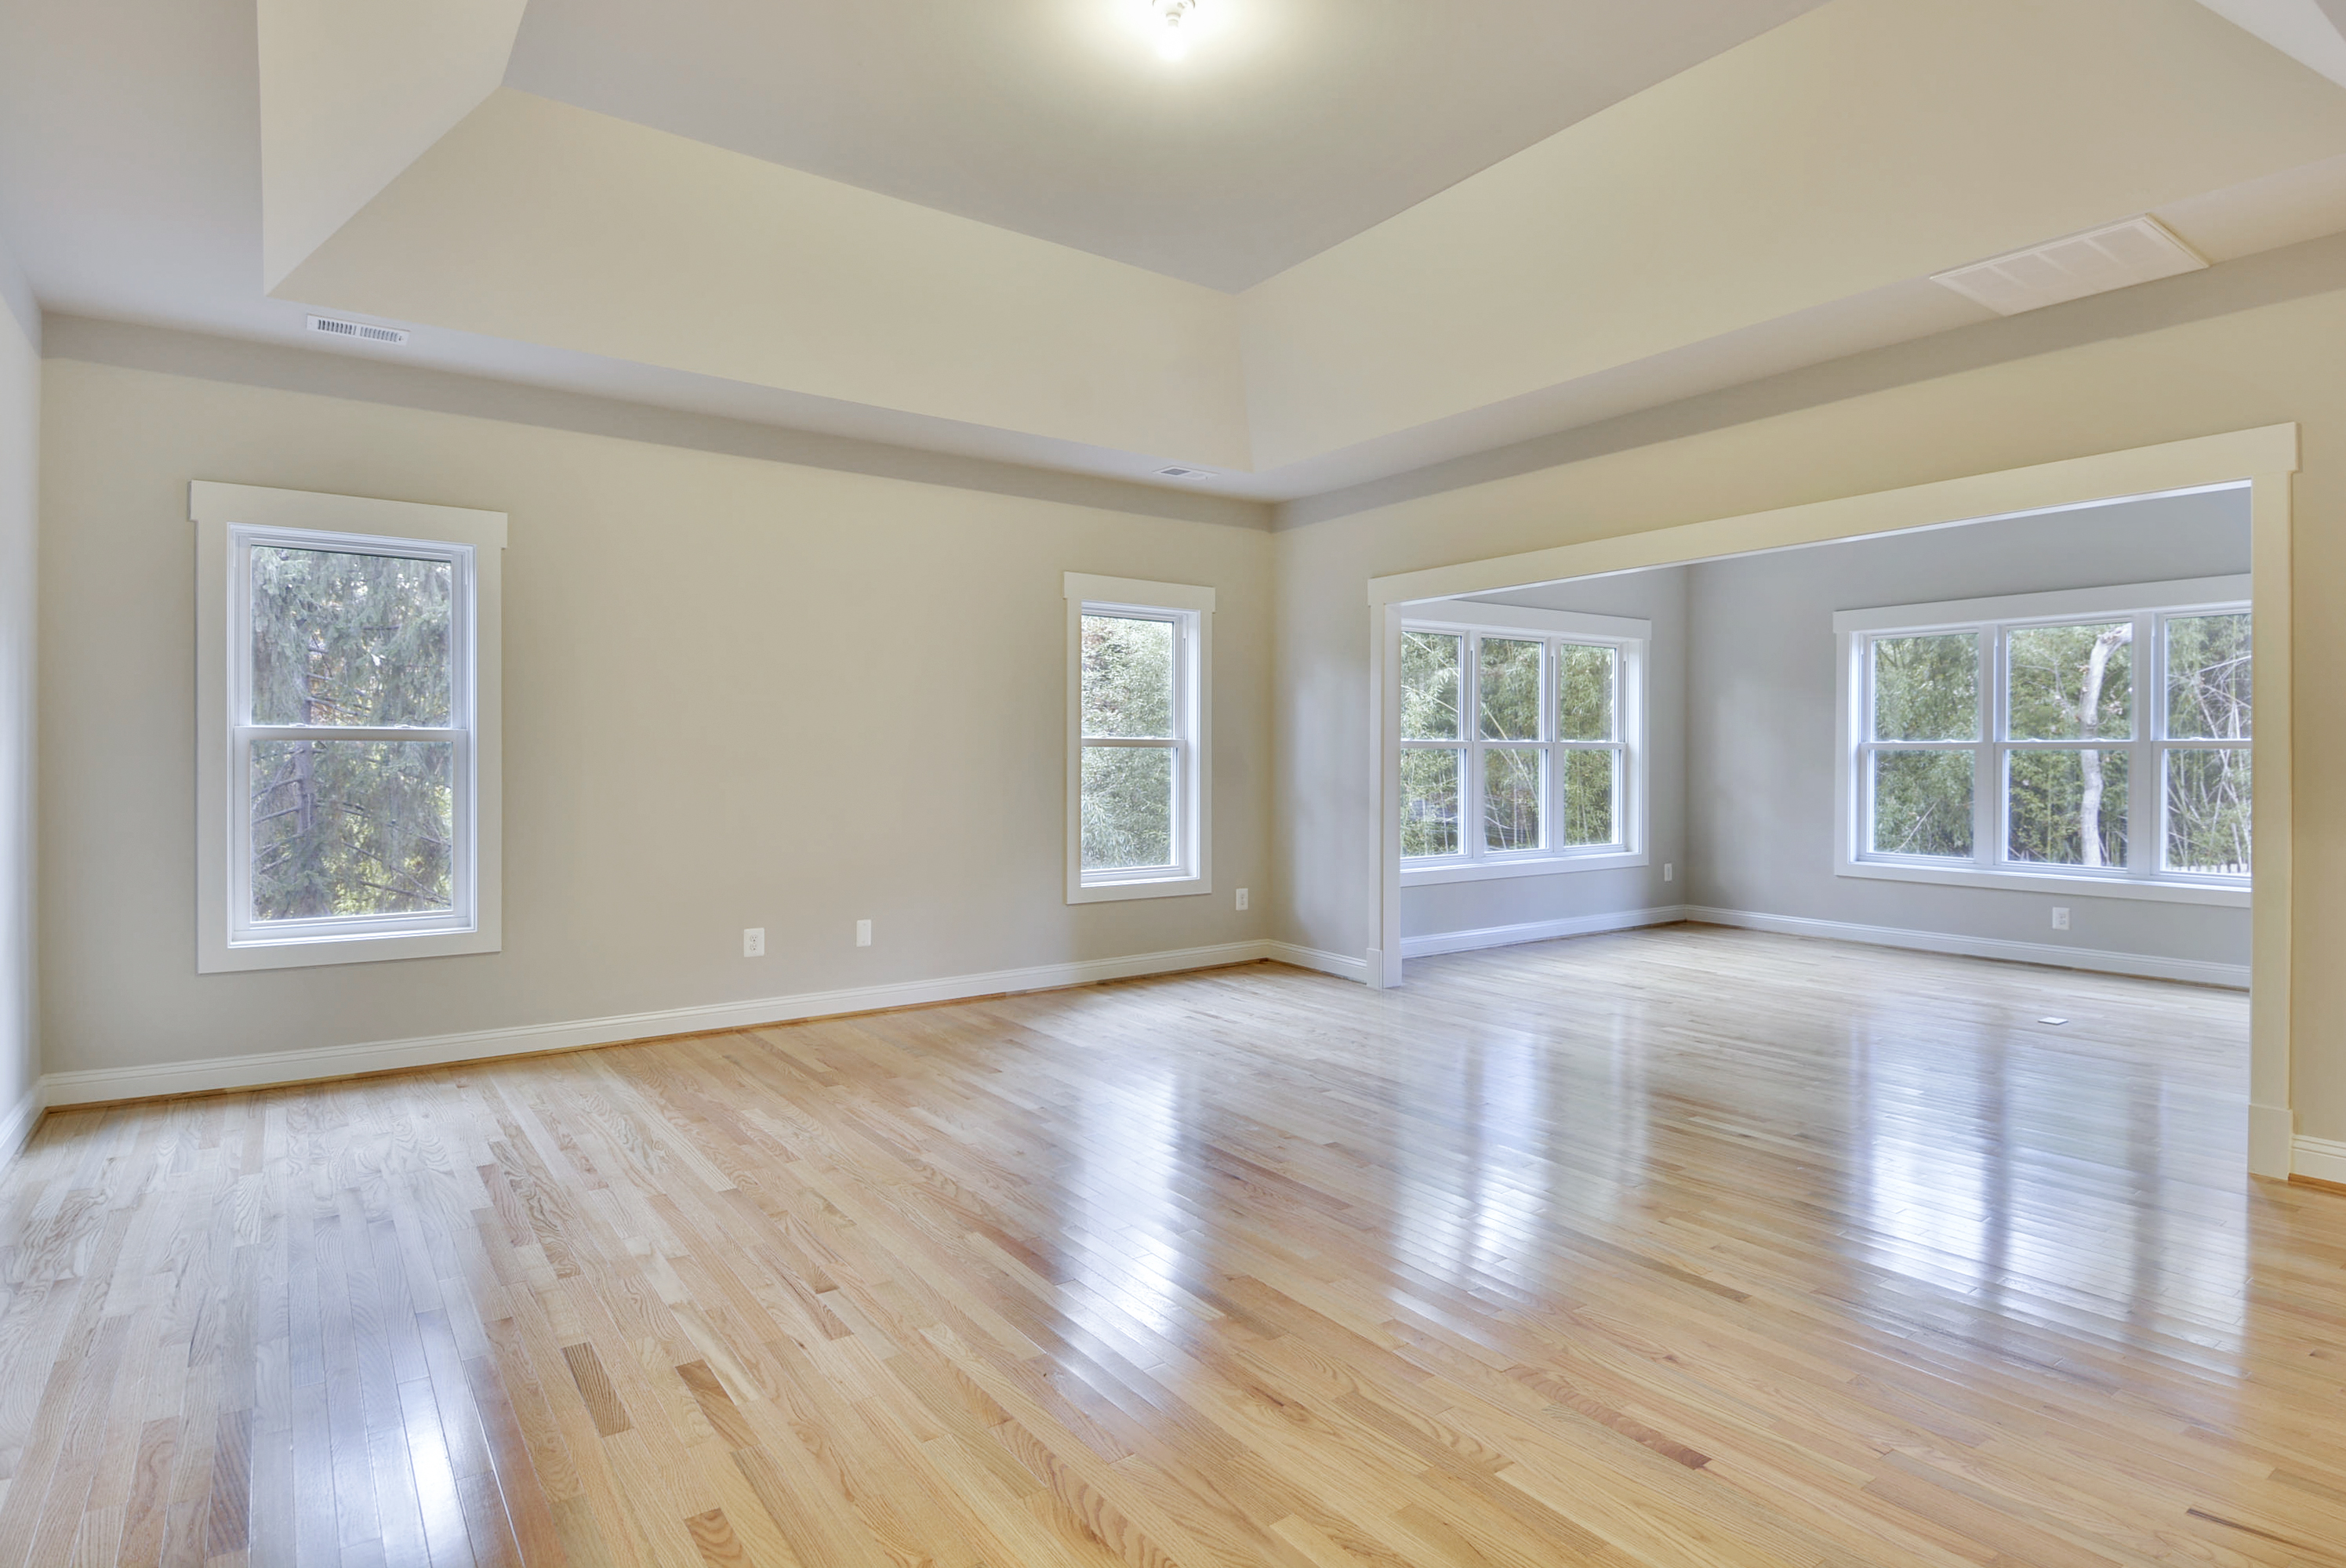 Wood Floor, Master Bedroom With Dark Hardwood Floors